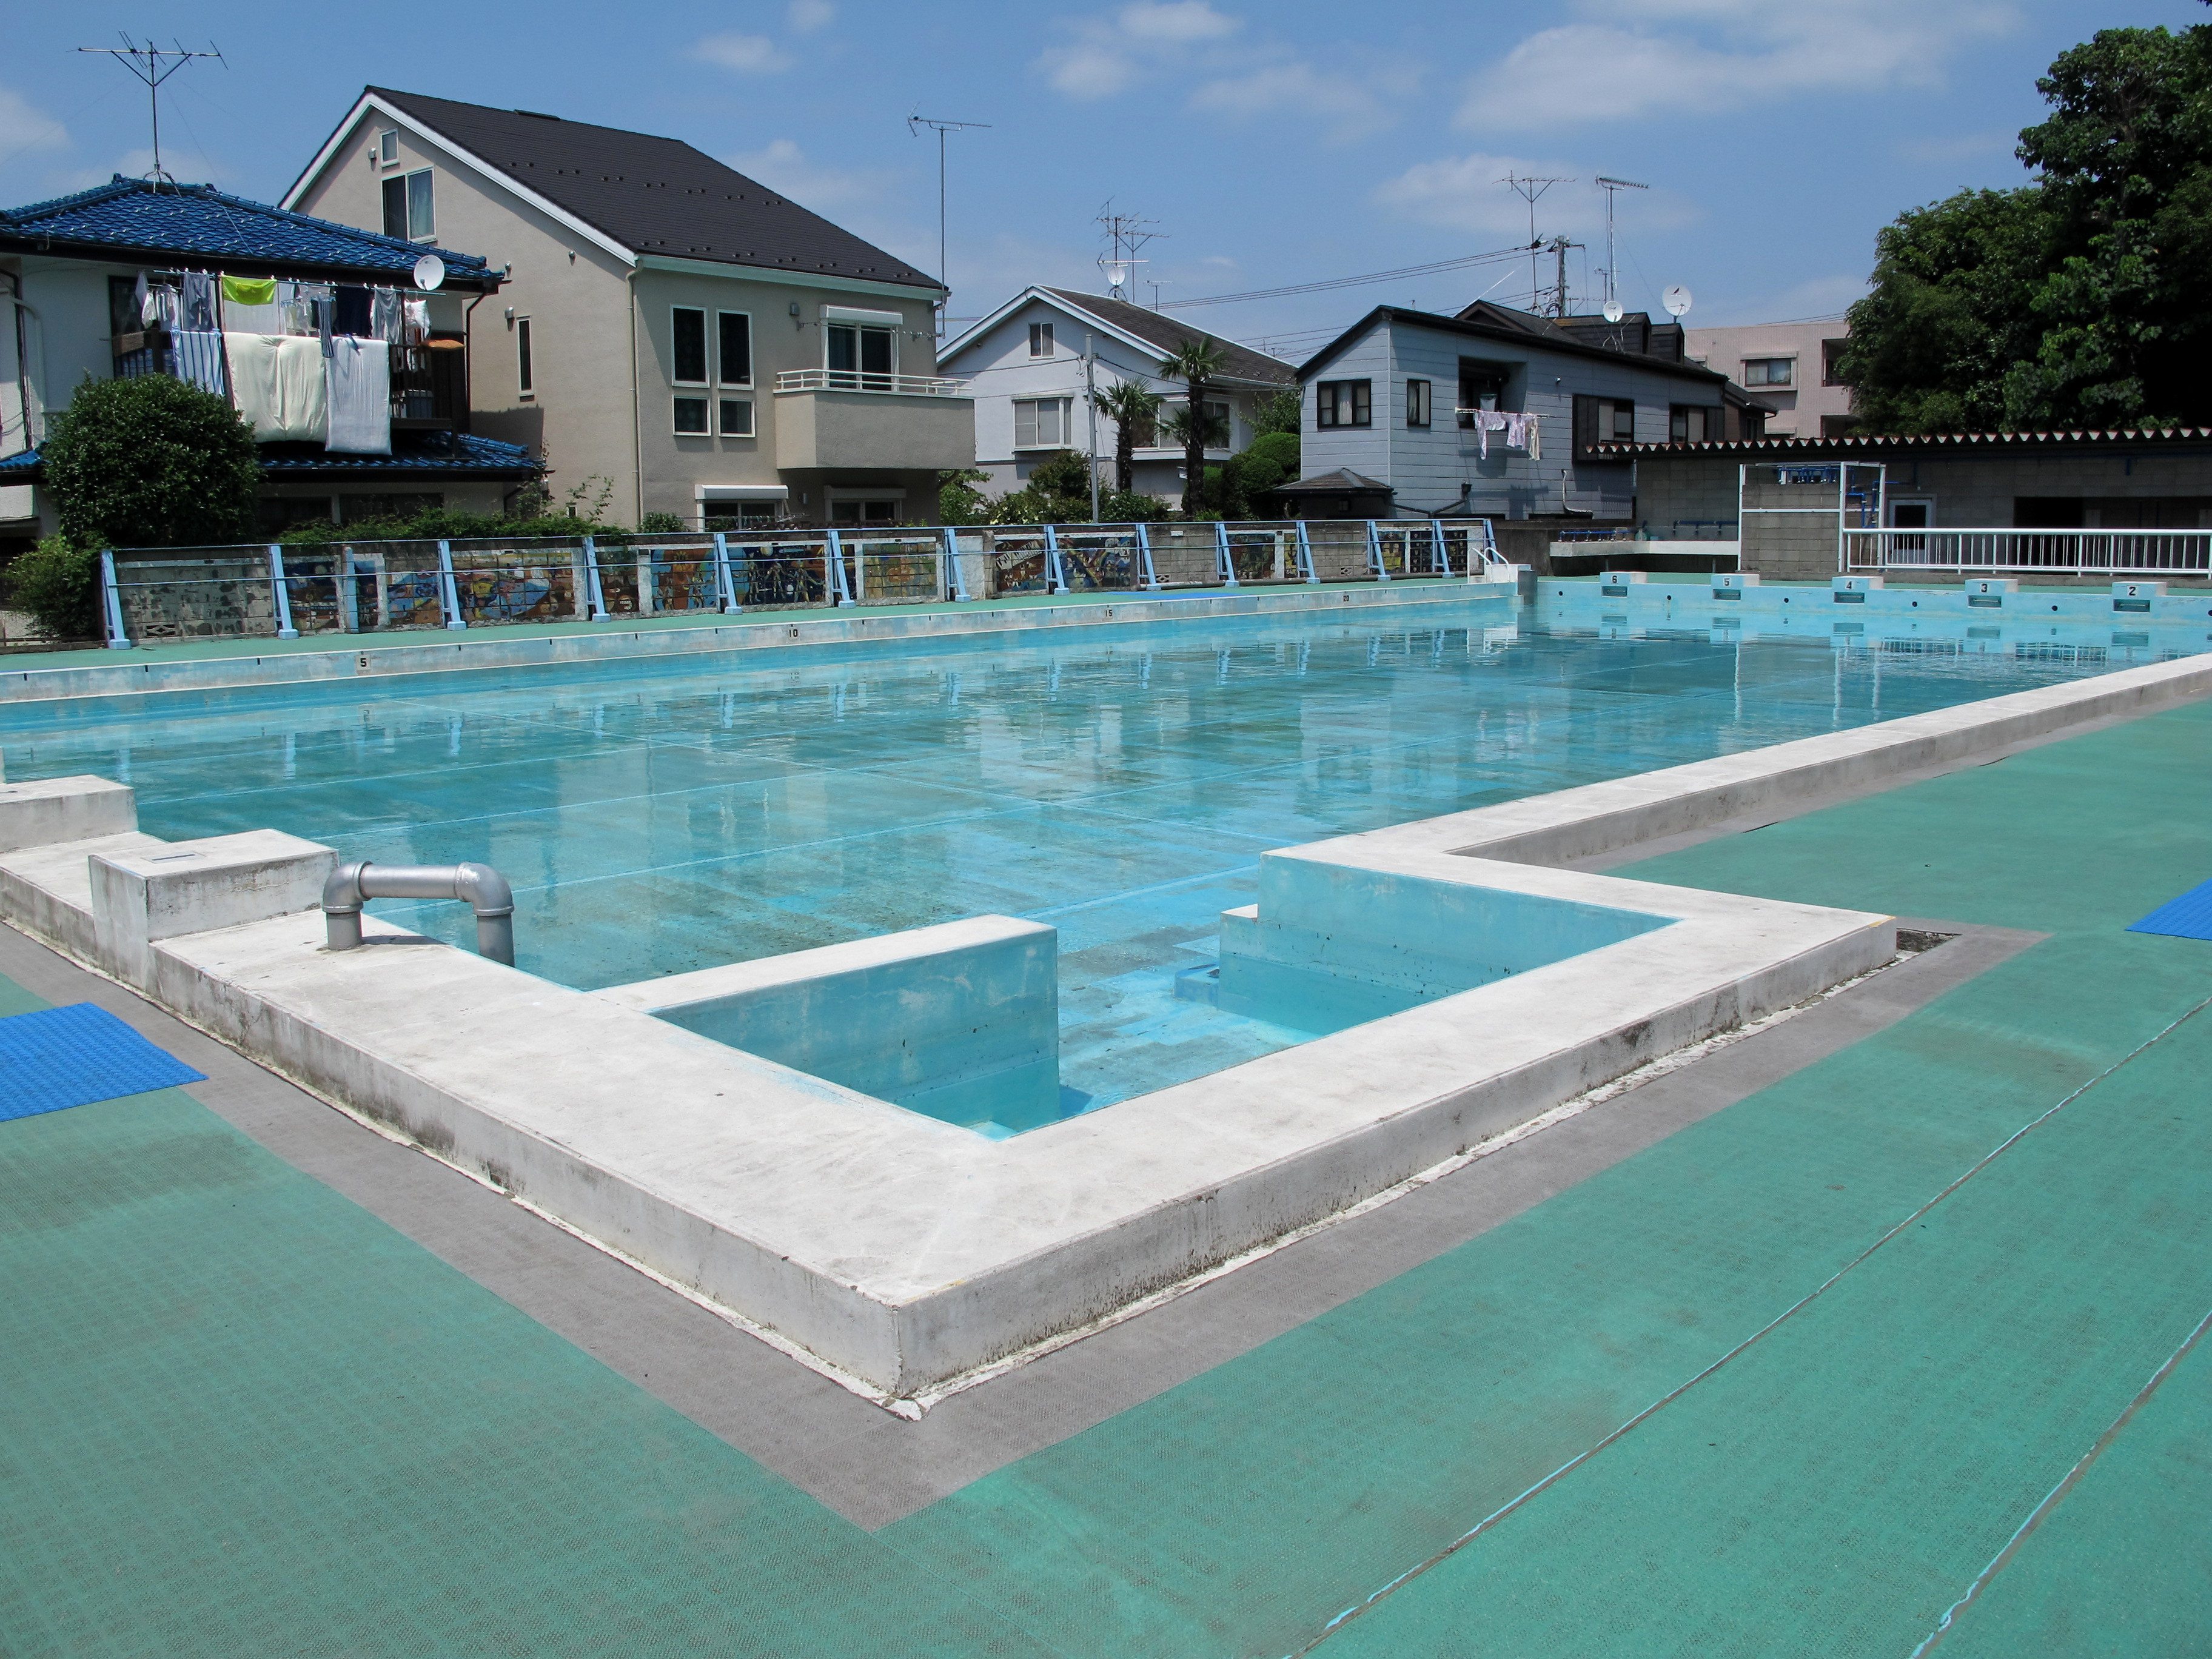 School swimming pool, Tokyo, Japan